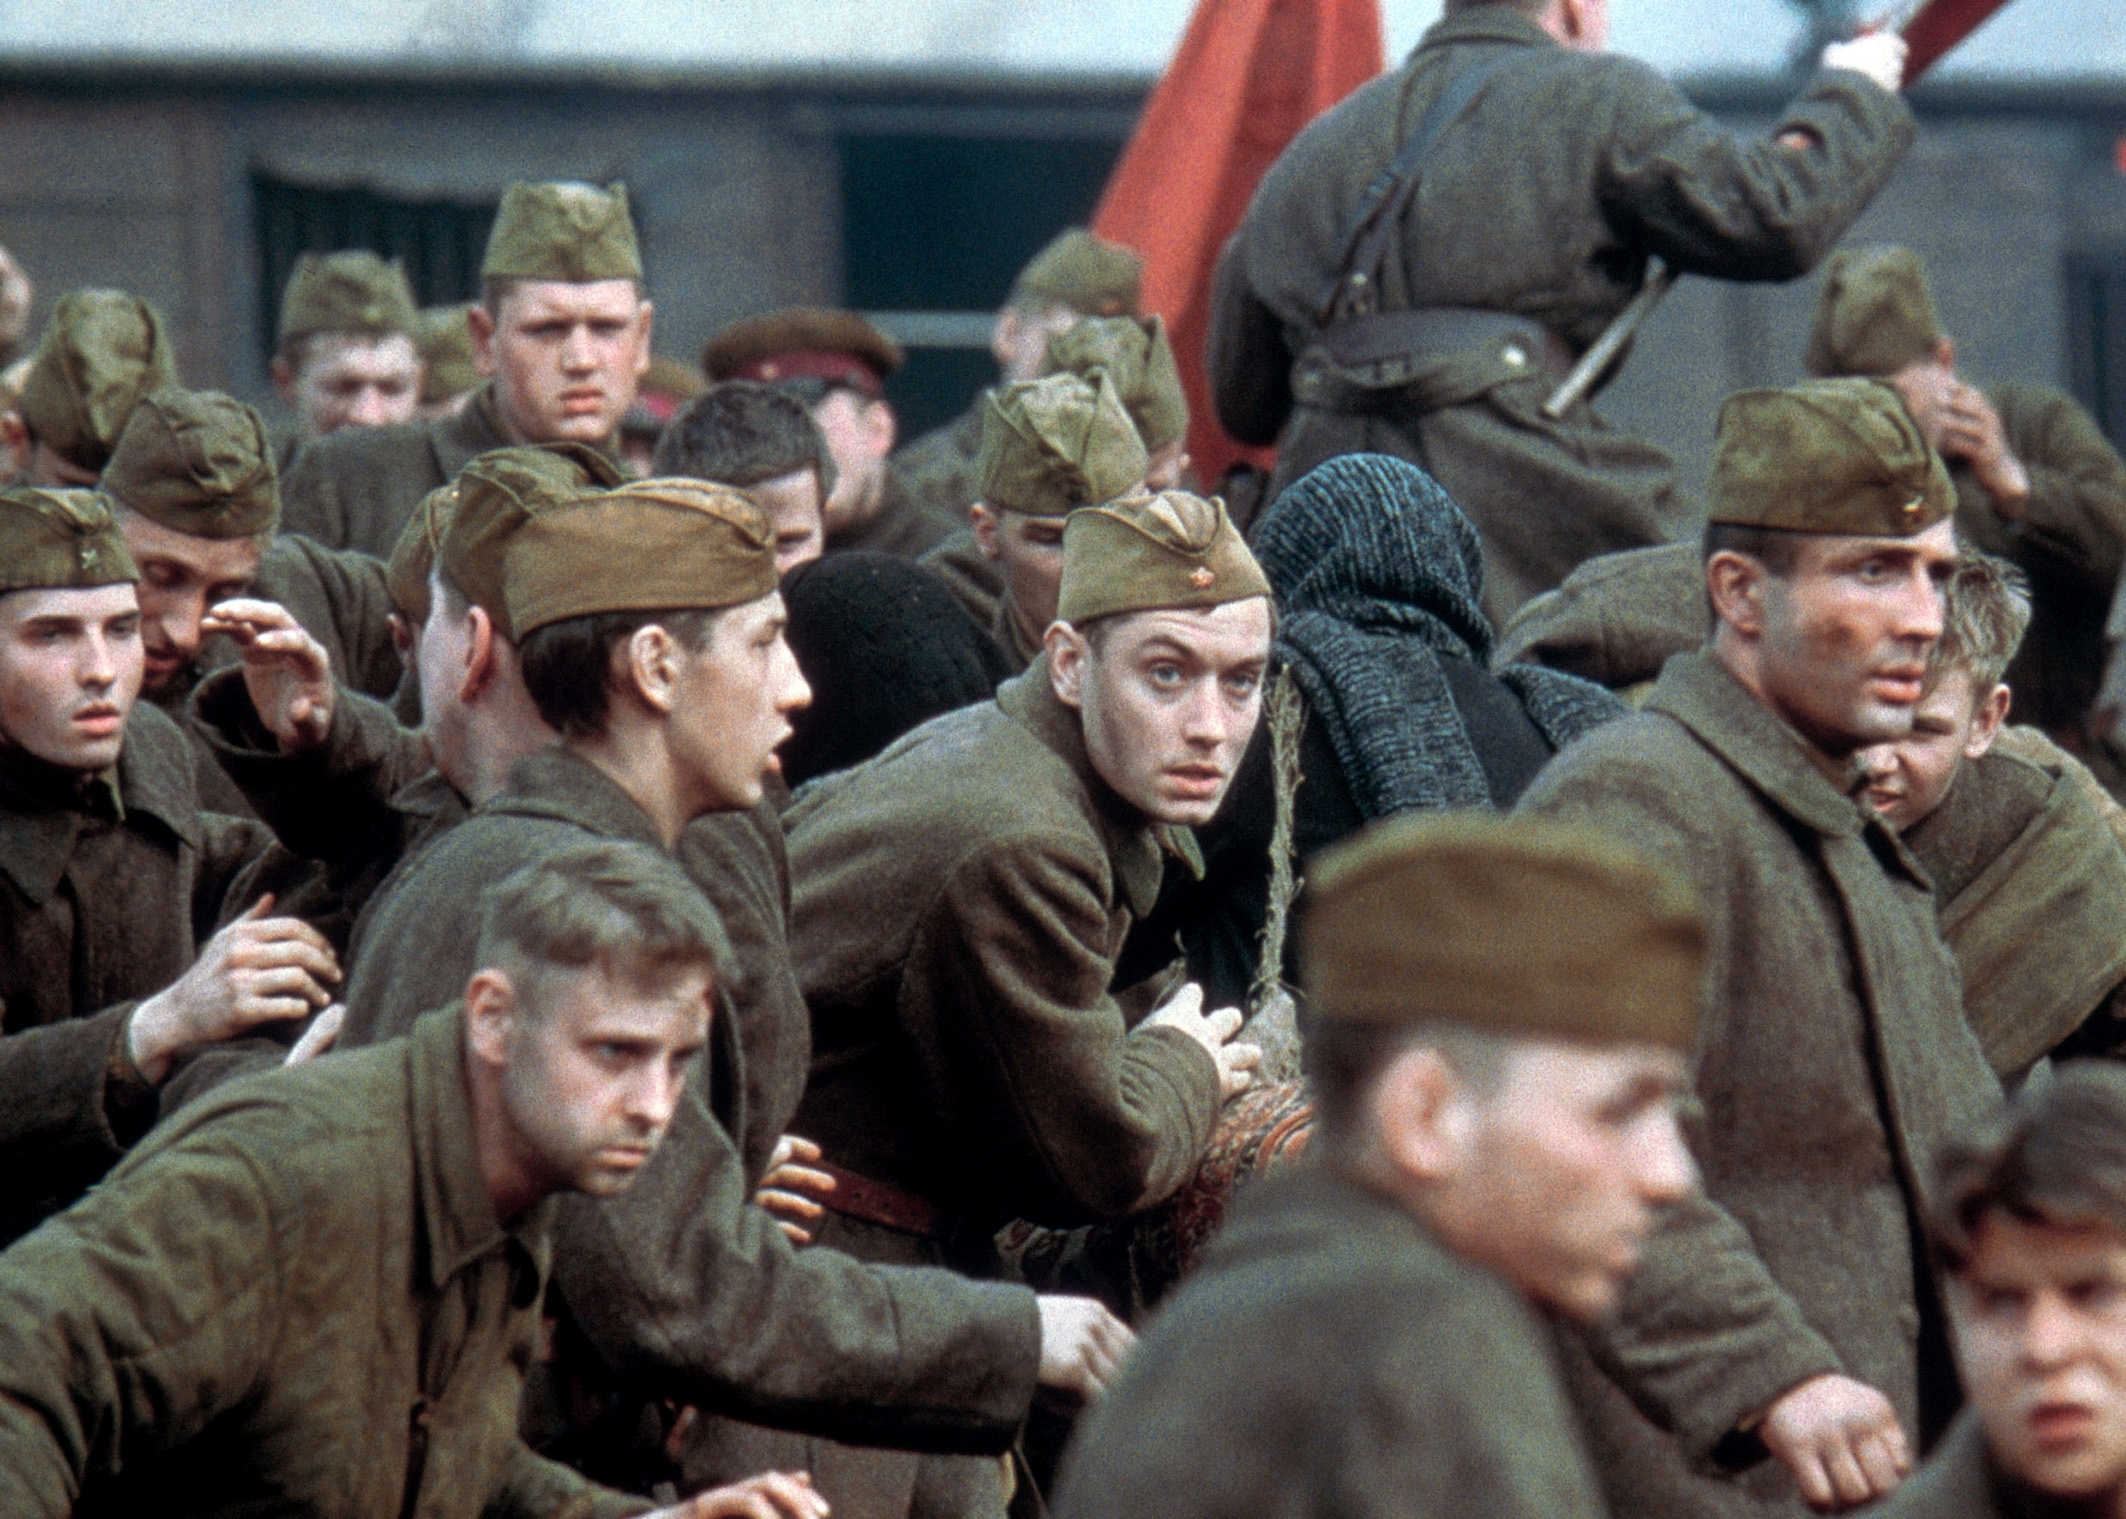 Image du film Stalingrad cbeaad71-3e04-4d3e-bcf3-033f5b92ff83